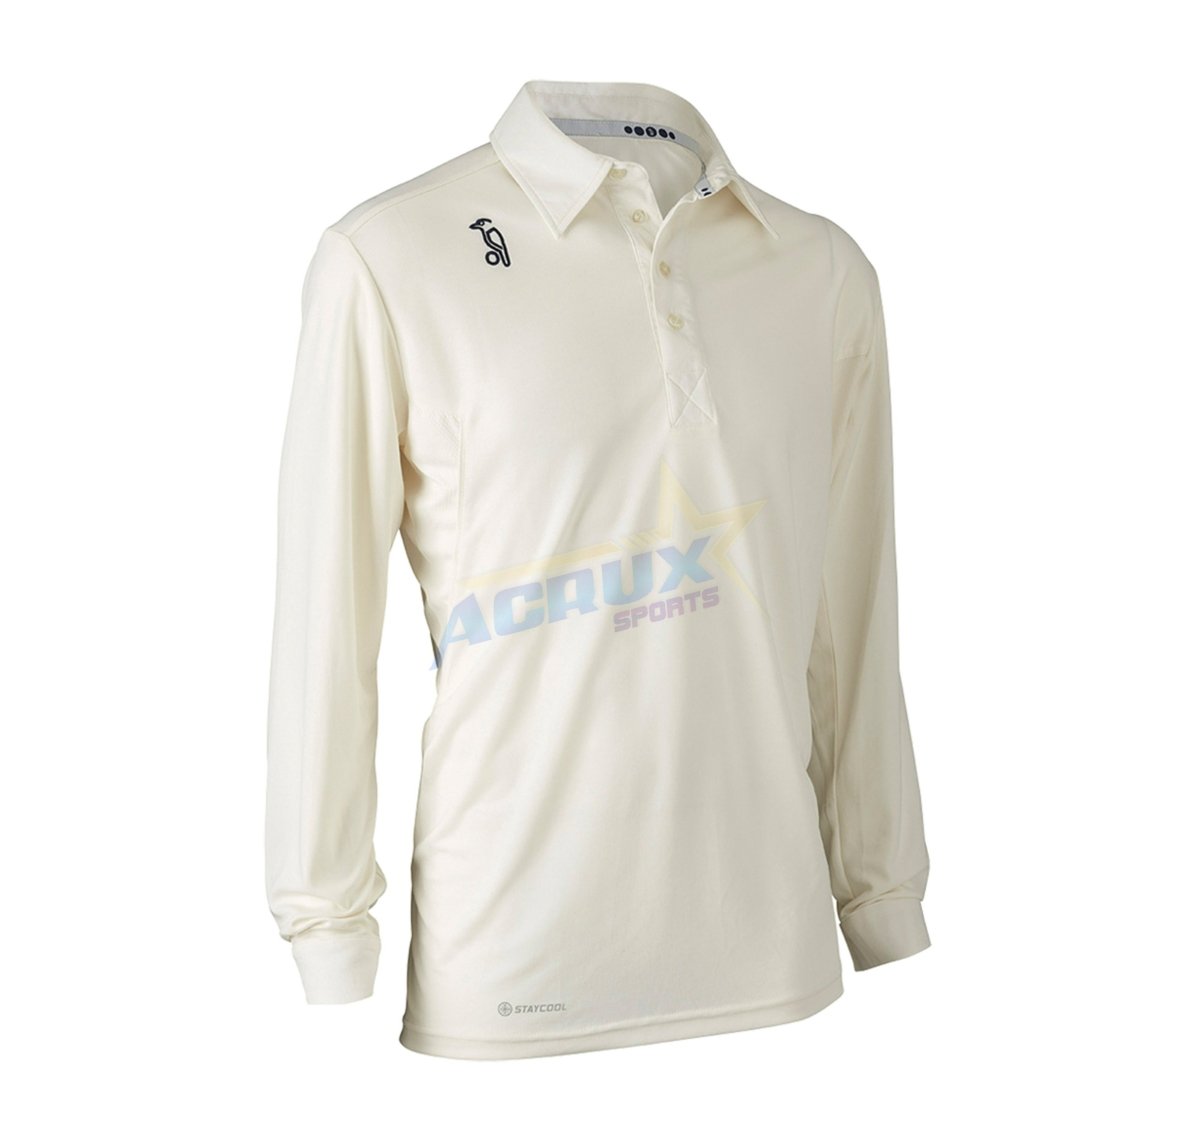 Kookaburra Pro Active Full Sleeve Cricket Shirt Cream - Acrux Sports